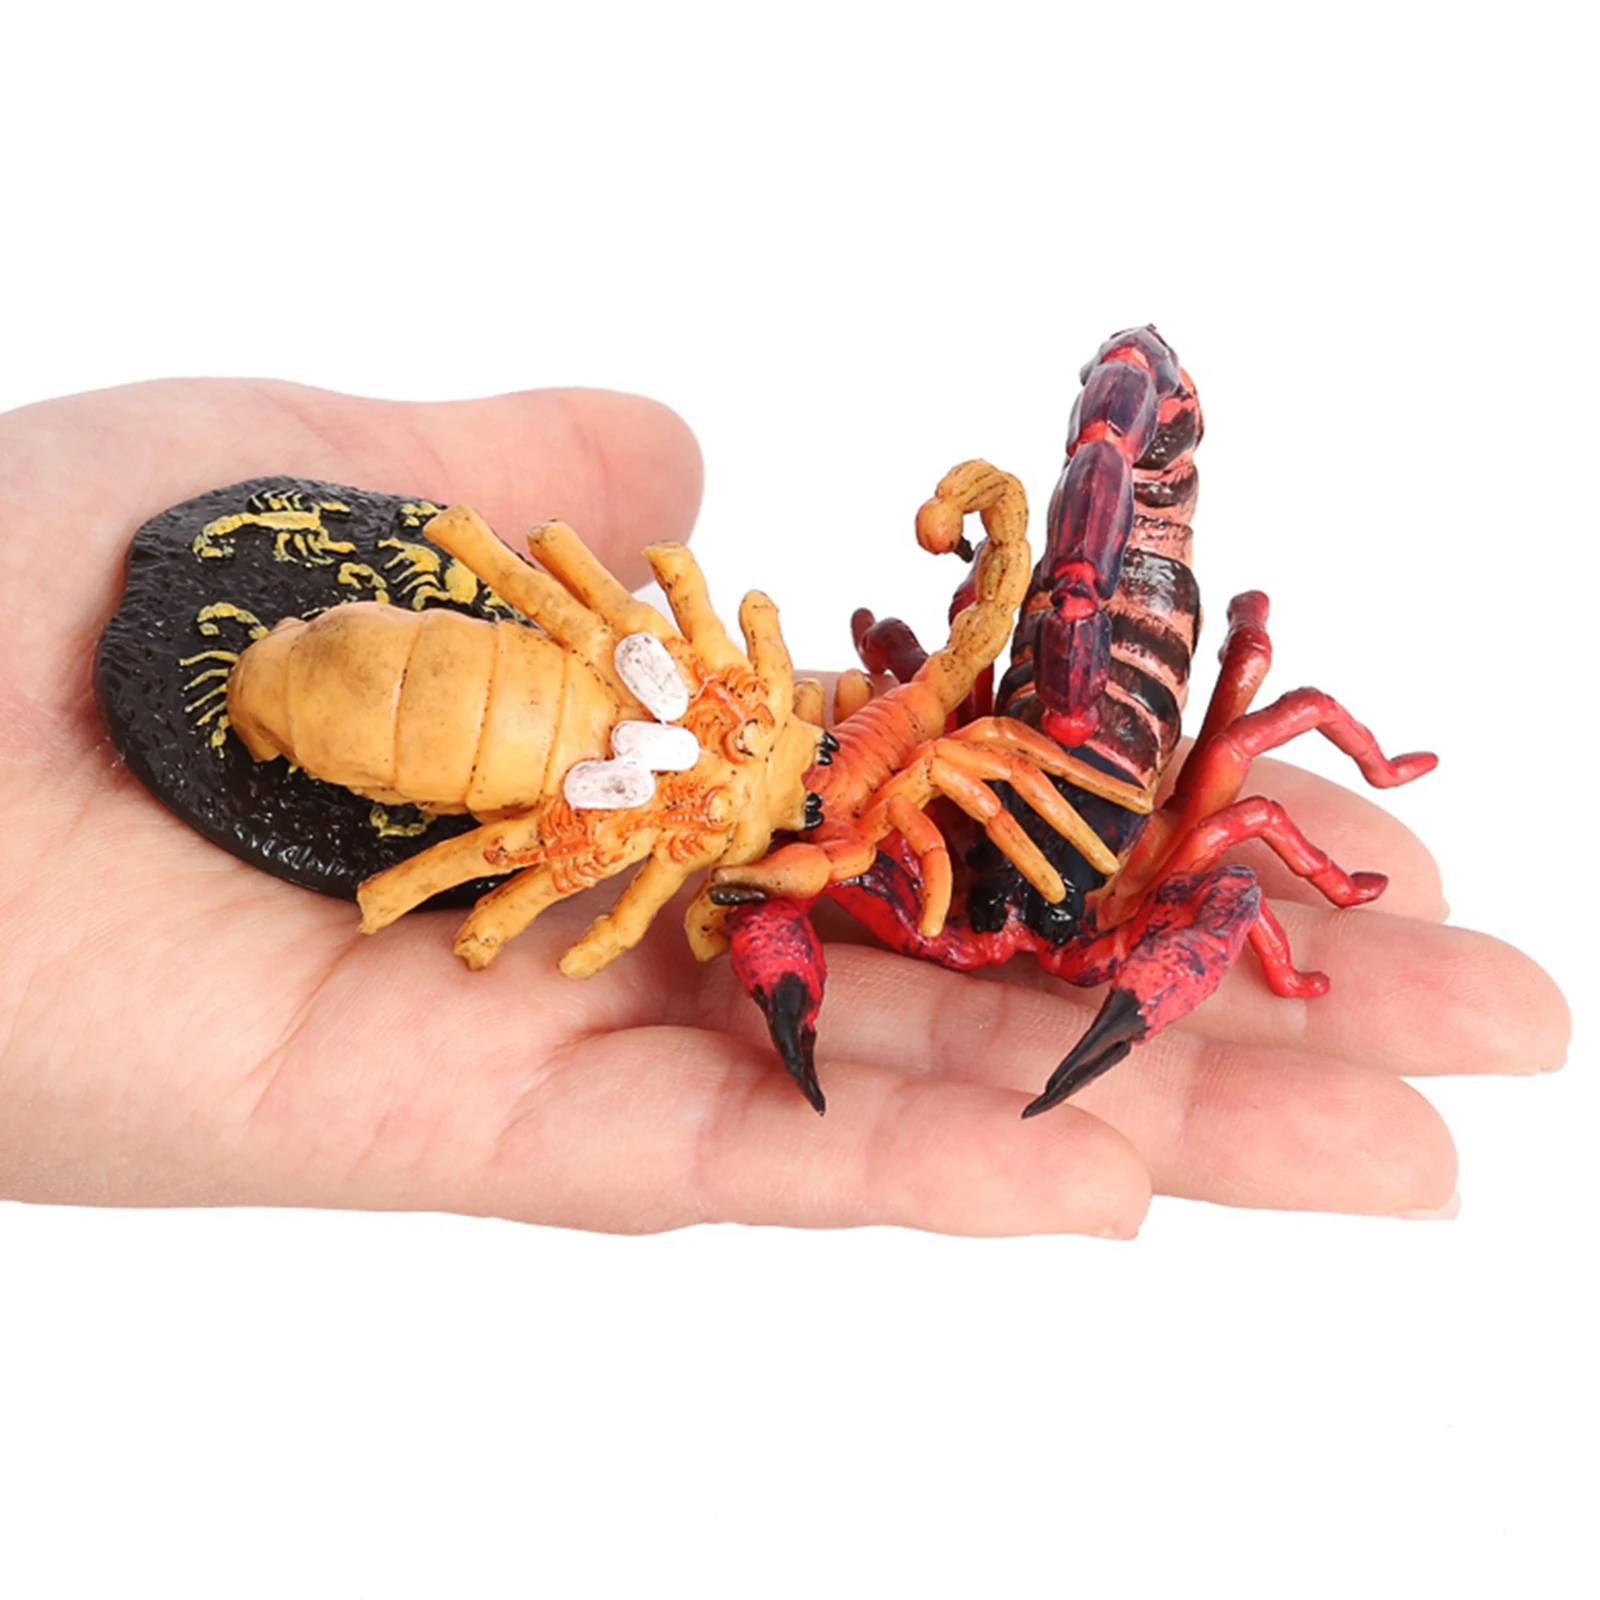 4Pcs Simulation Scorpion Life Cycle Set Toy Figures Learning & Preschool 